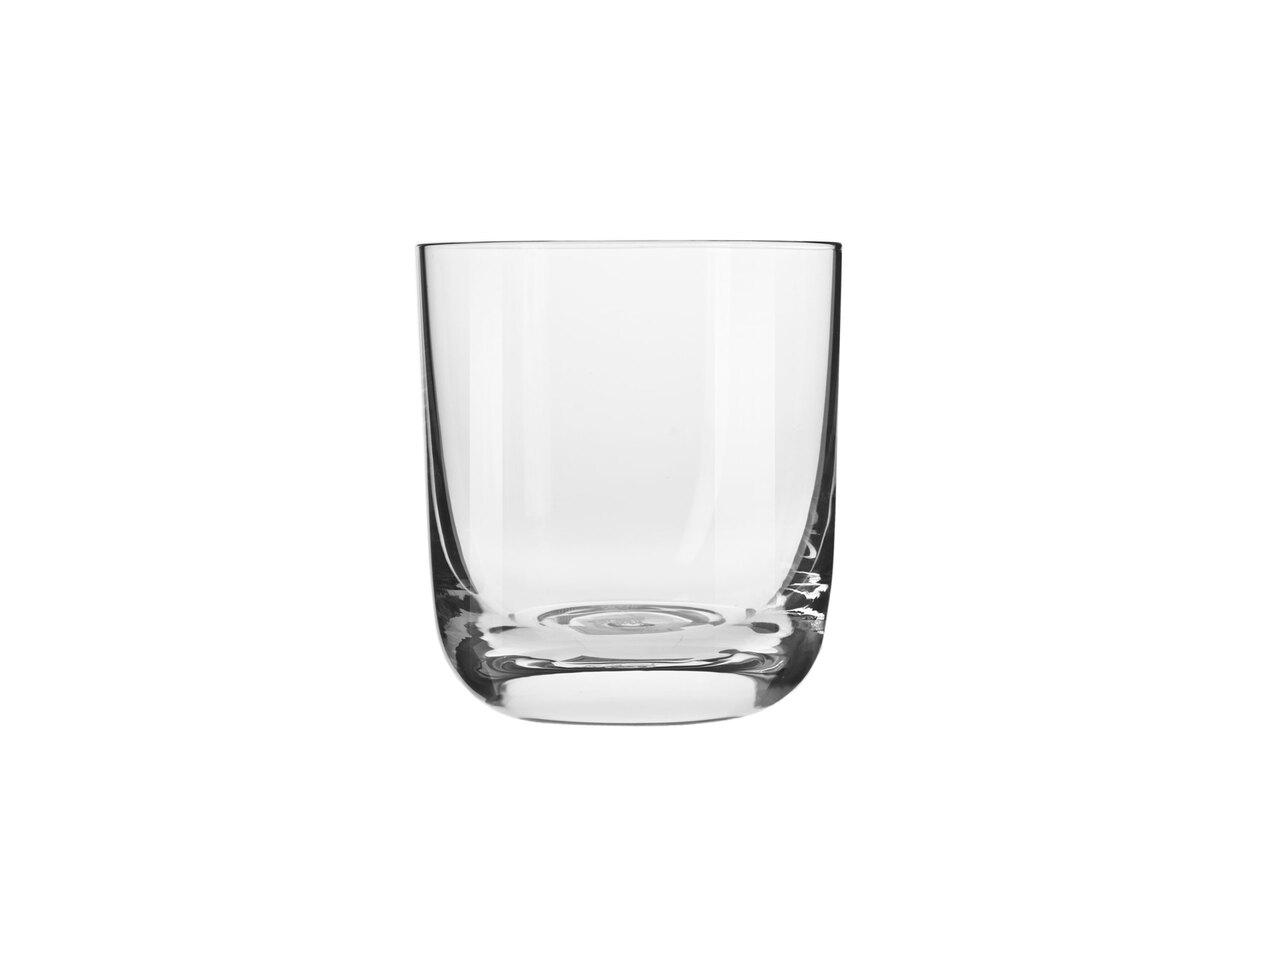 KROSNO® Szklanka do whisky GLAMOUR 300 ml, 6 szt. , cena 34,99 PLN